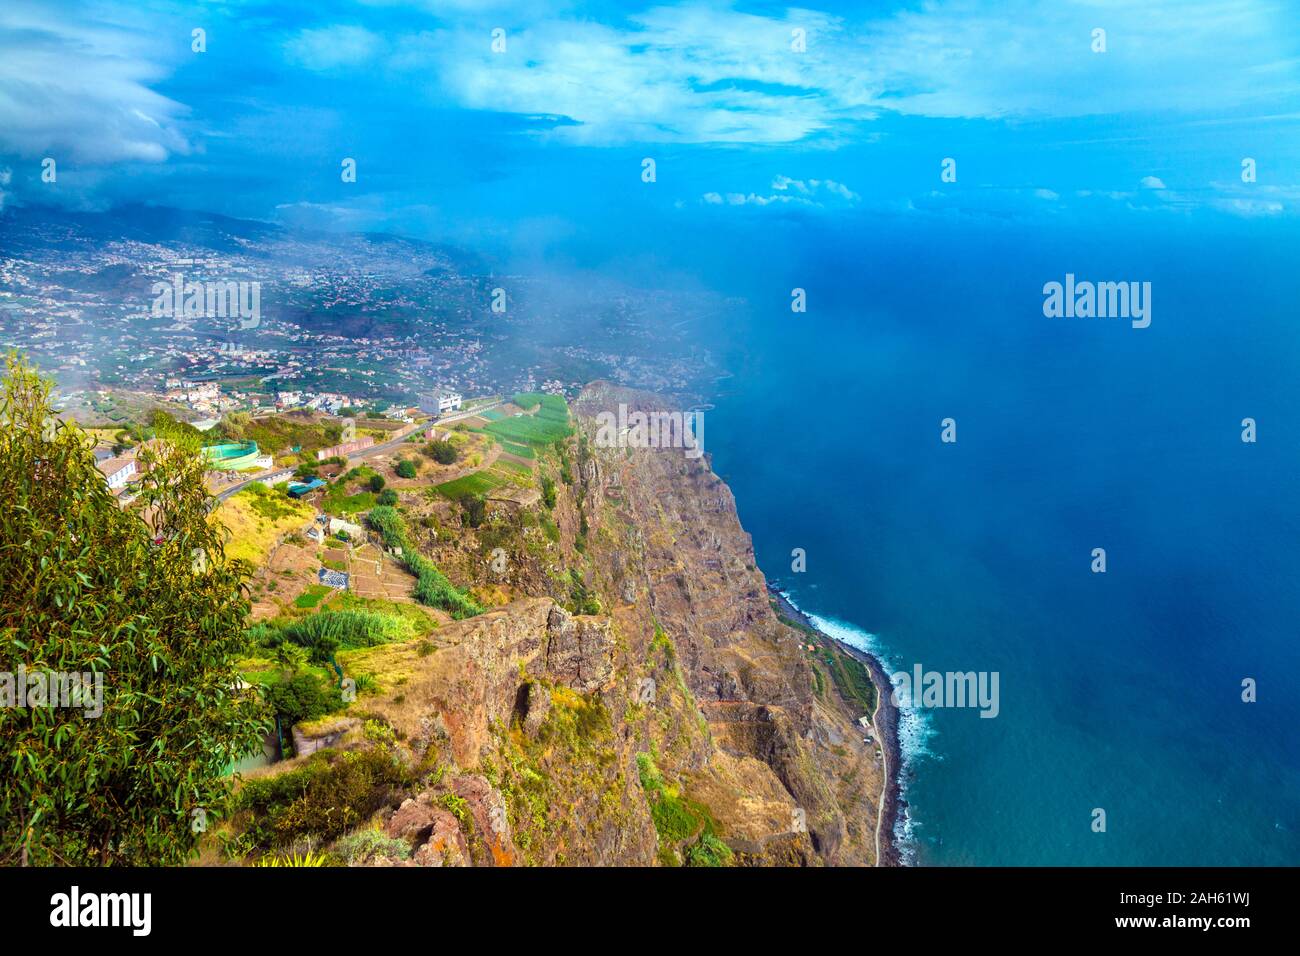 View over cliffs and coastline at Cabo Girao (Cape Girão) skywalk viewing terrace, Madeira, Portugal Stock Photo